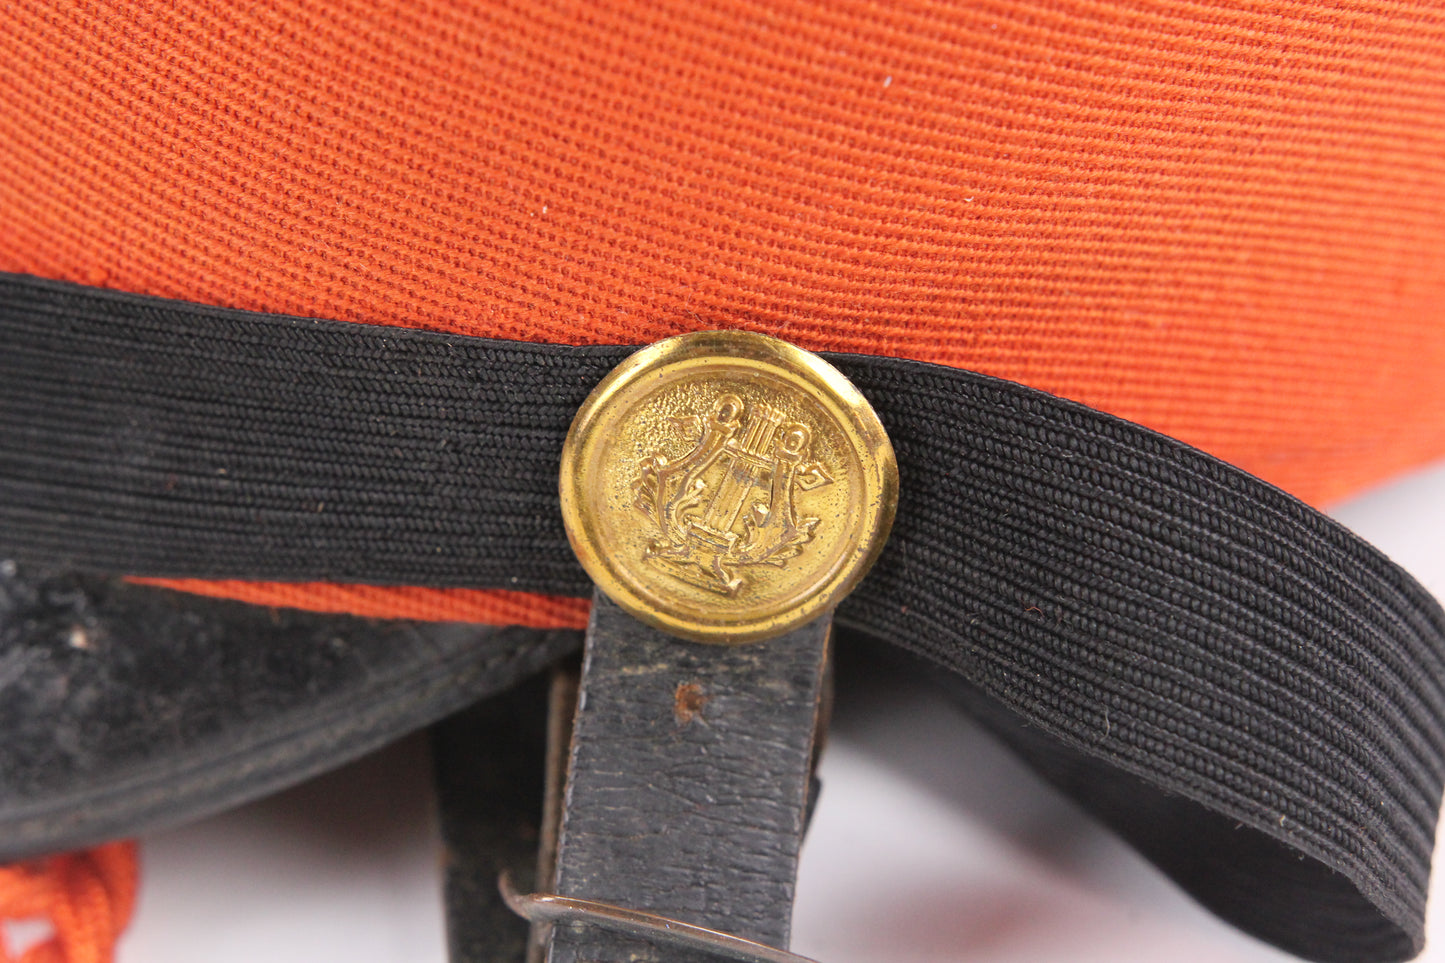 Vintage Orange Military Dress Cap Hat, Possibly West Point